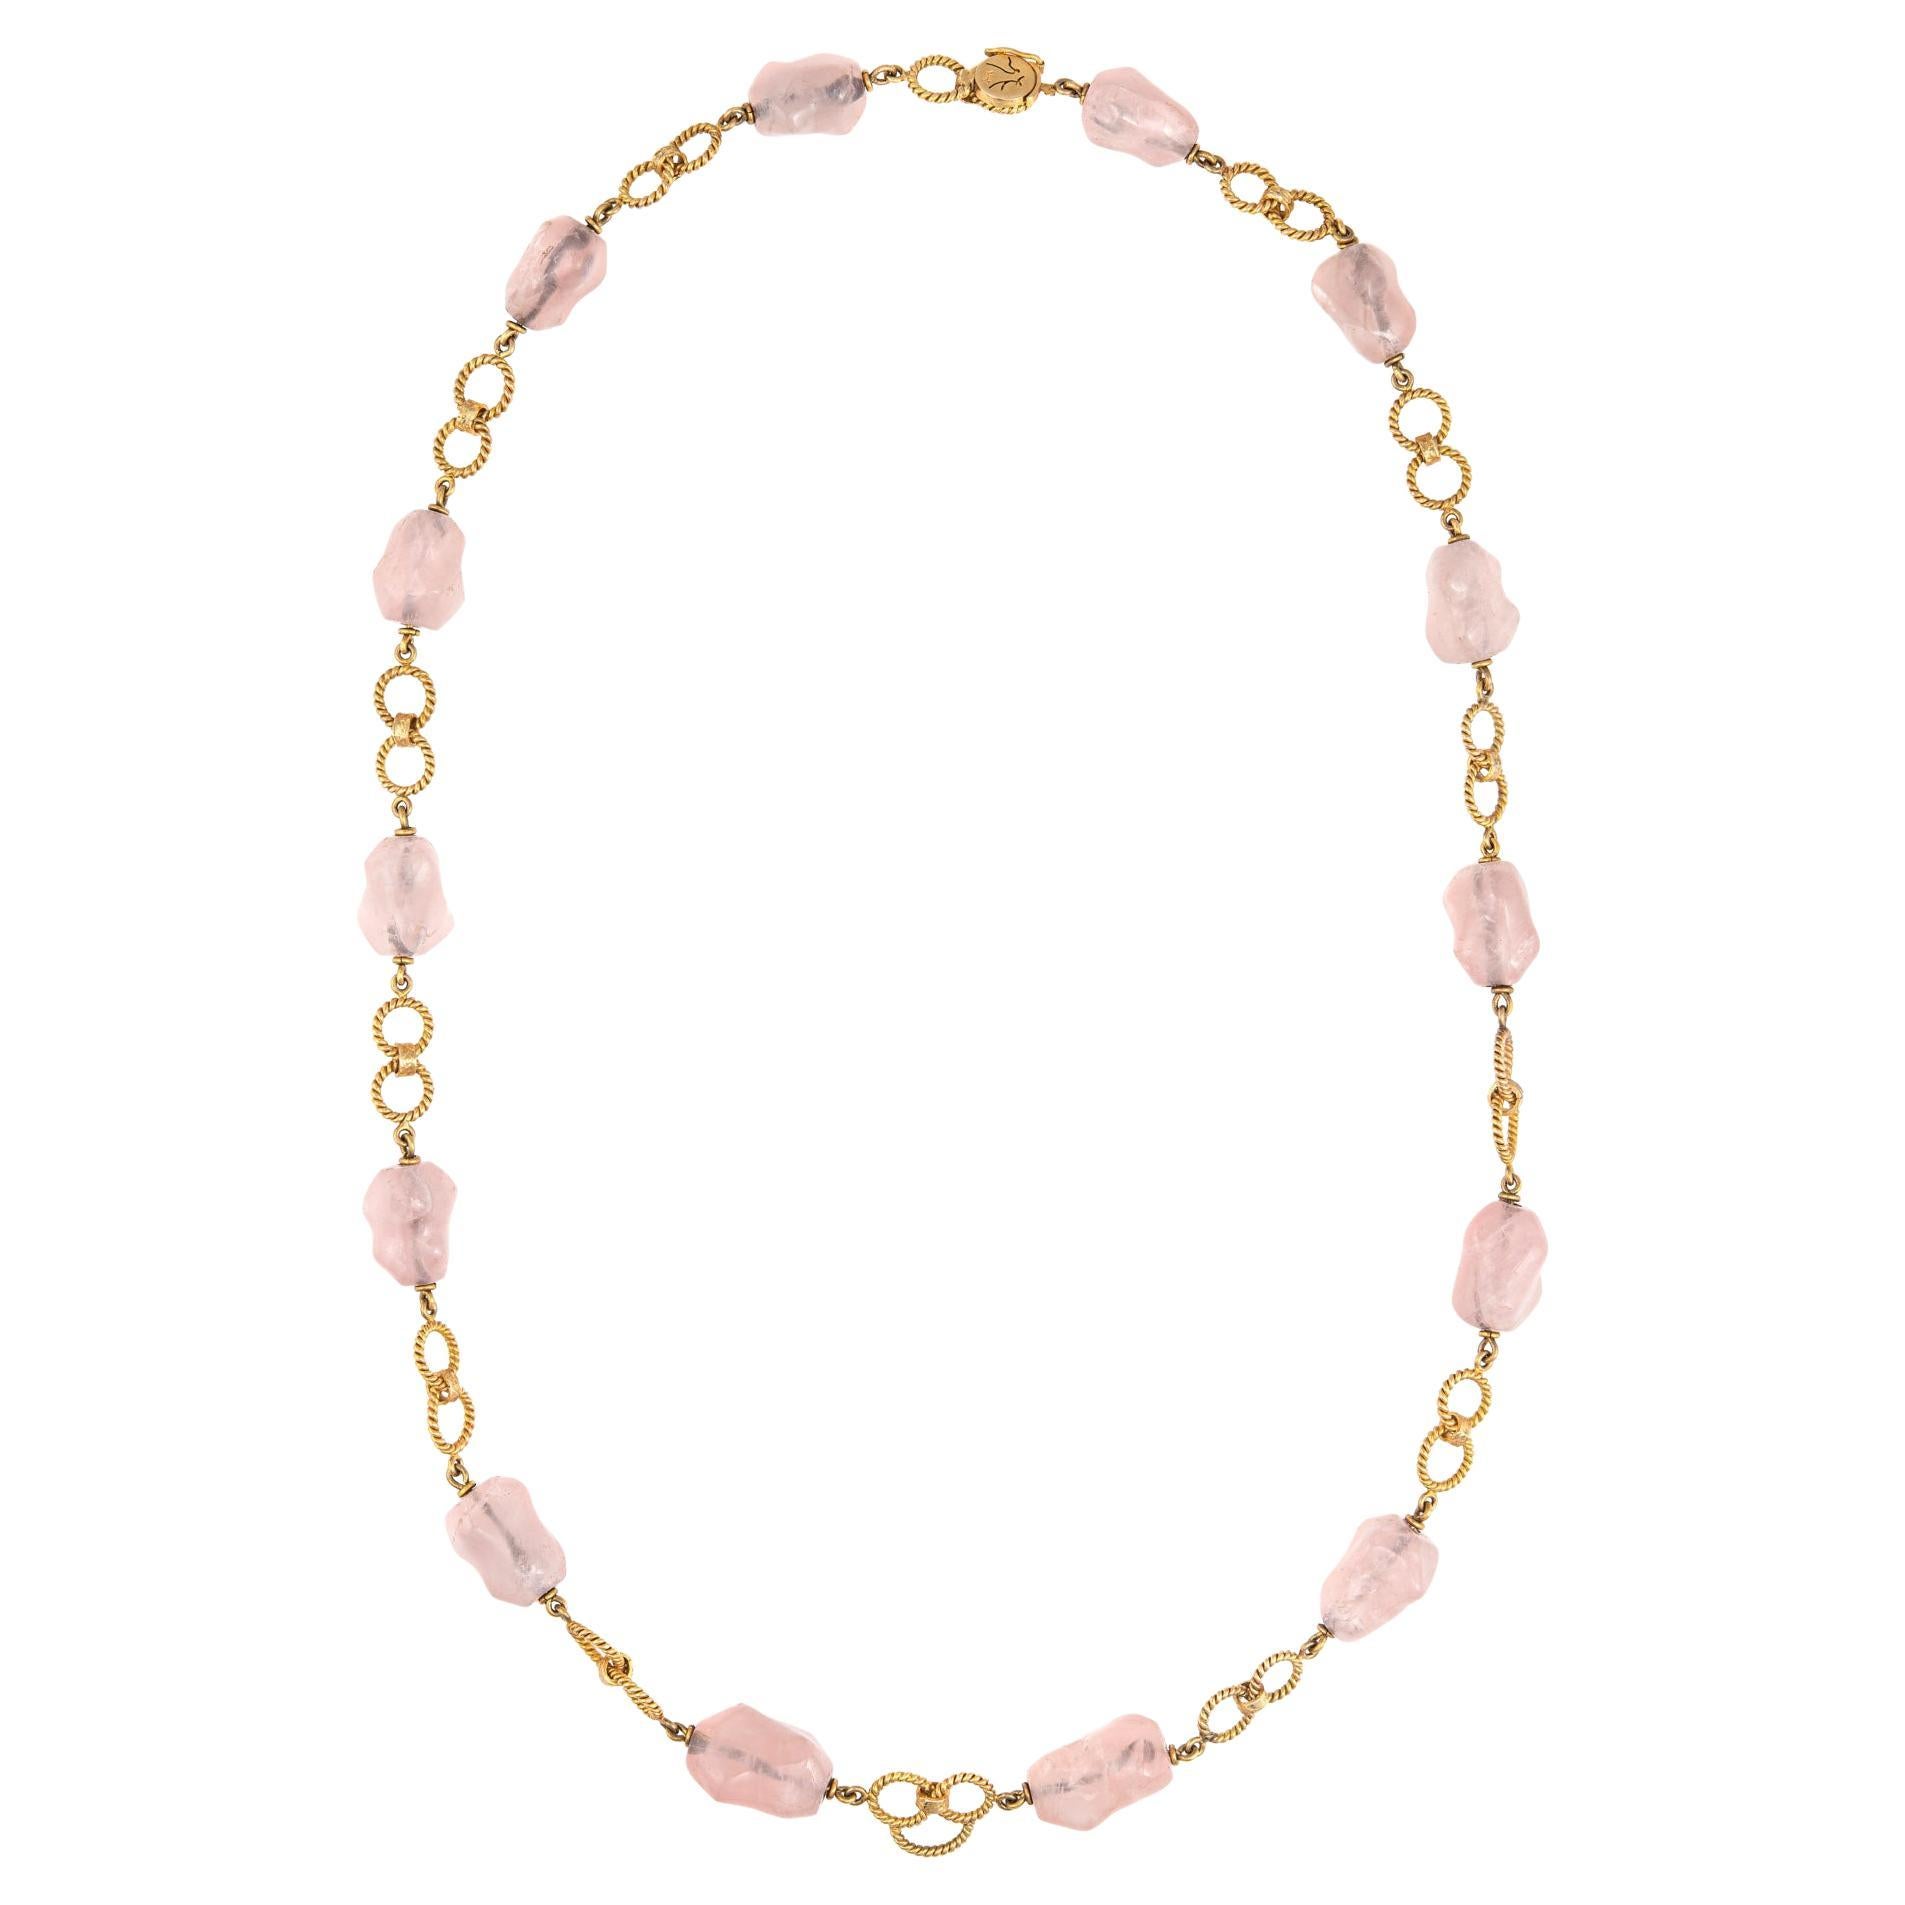 Vintage 70s Rose Quartz Bead Necklace 14k Gold 26.5" Long Strand Round Links